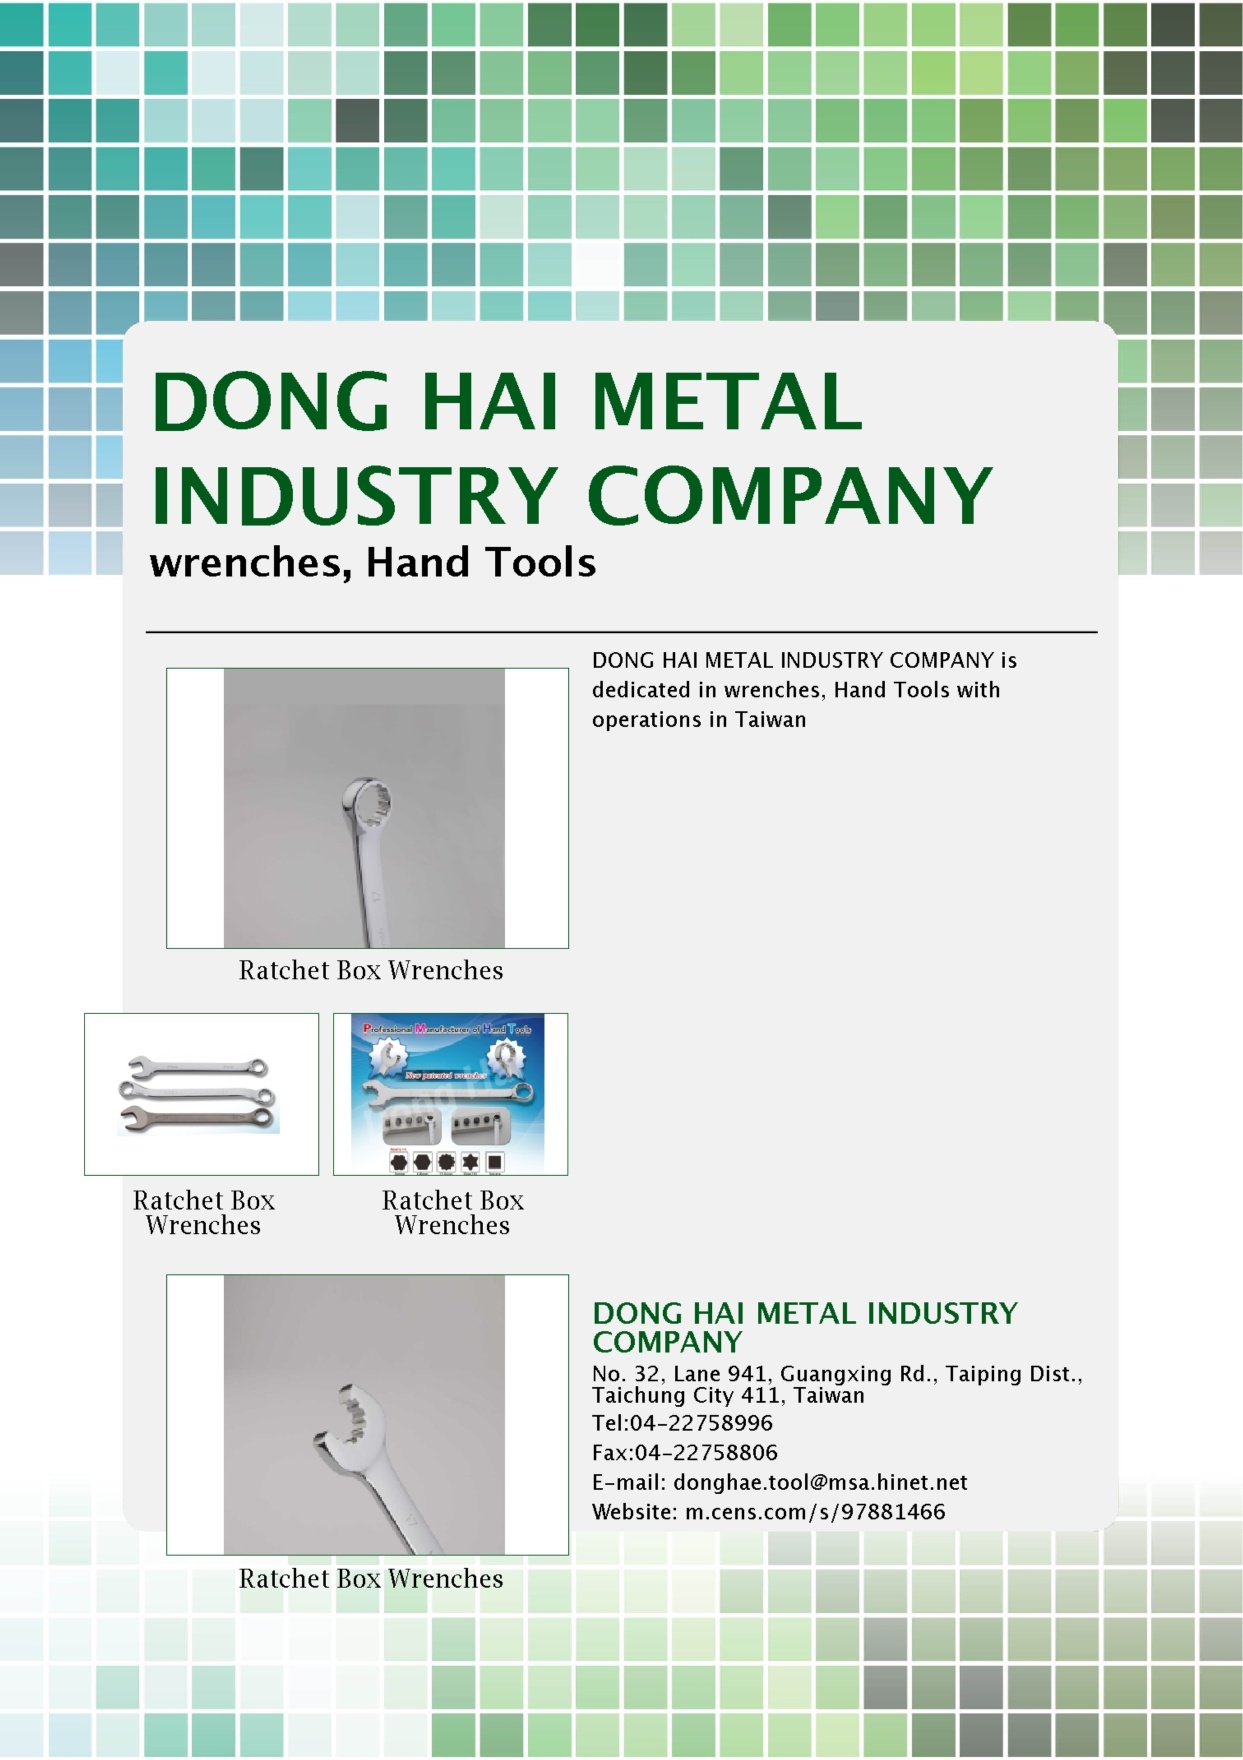 DONG HAI METAL INDUSTRY COMPANY